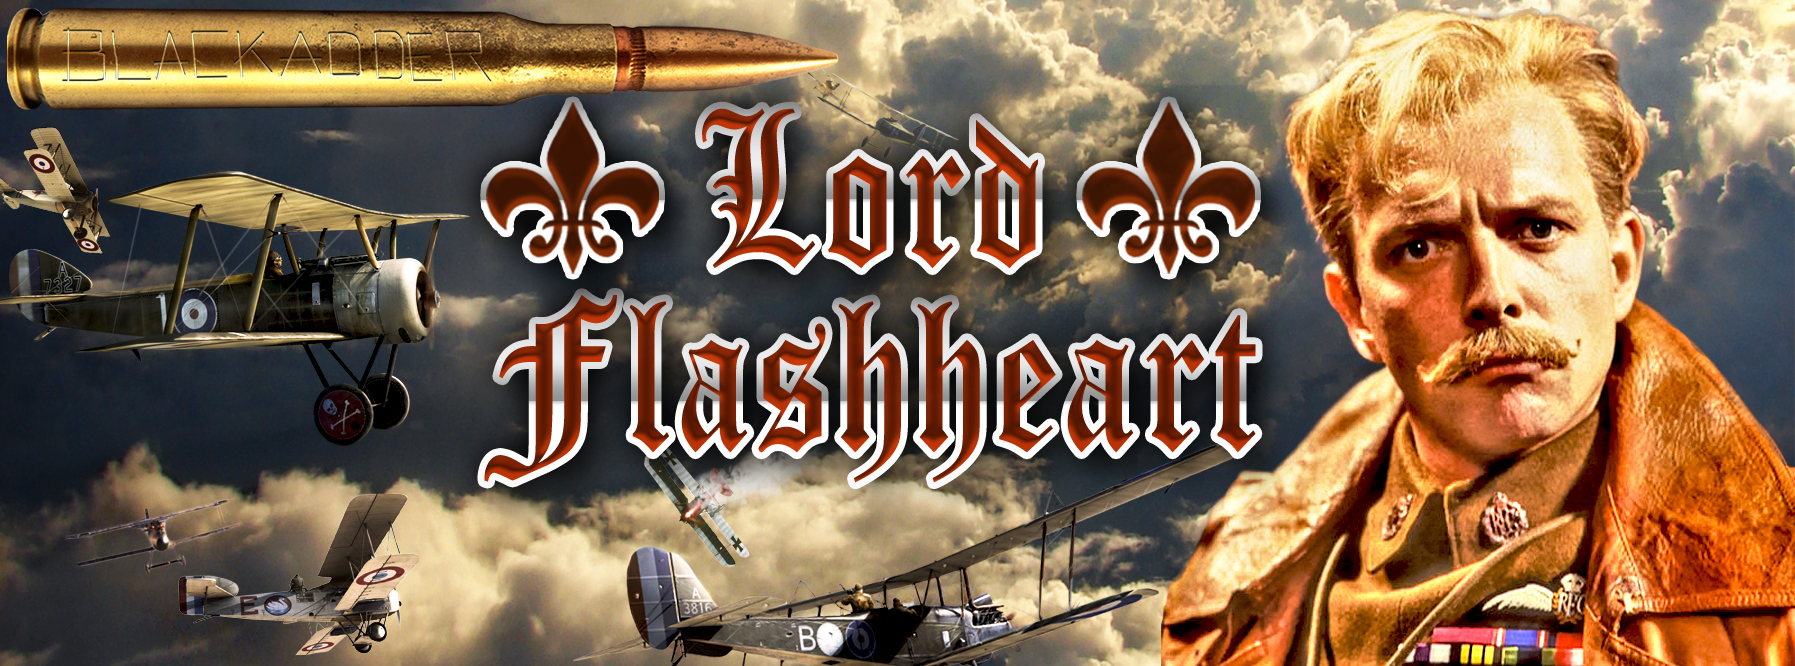 blackadder_lord_flashheart_facebook_cover_by_mexrap-d5ius1s.jpg